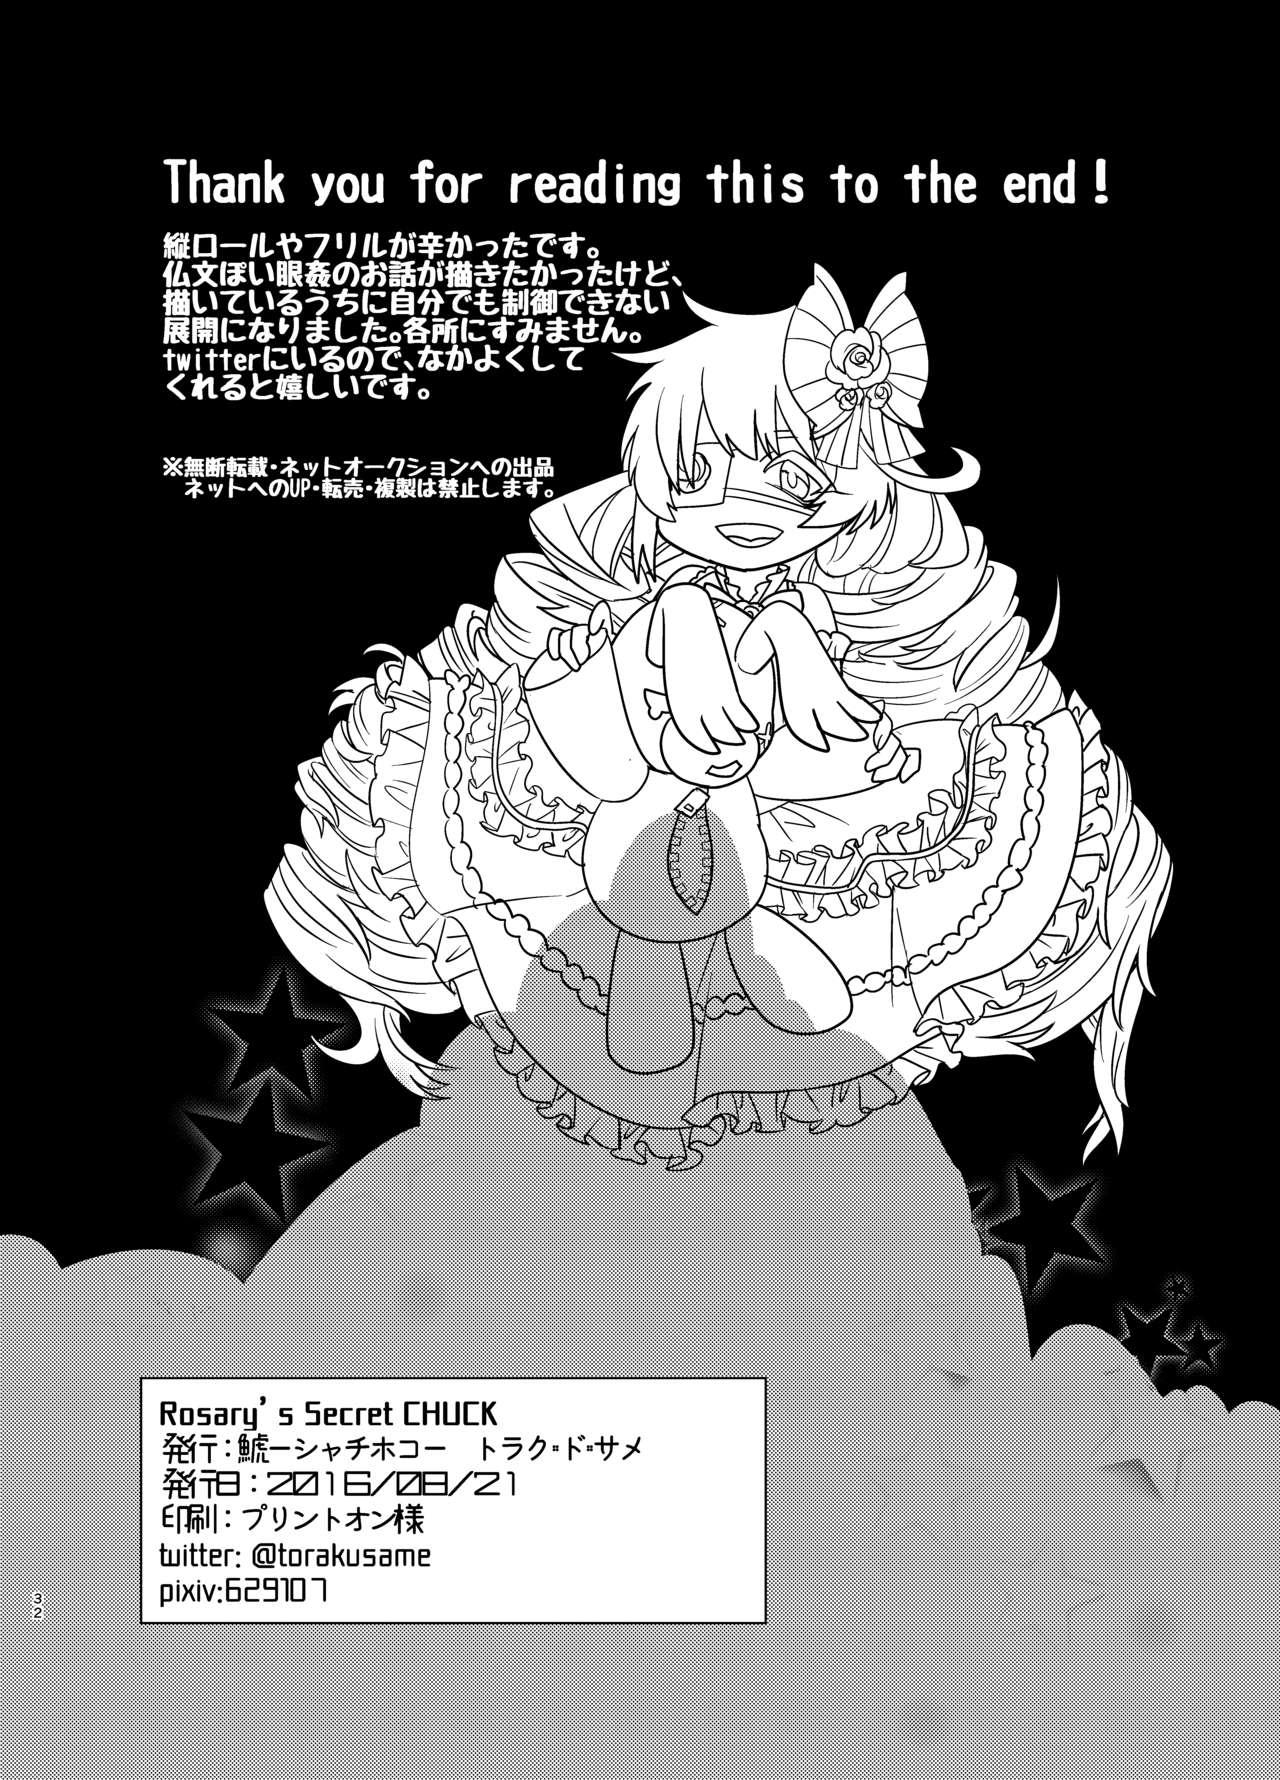 Fellatio Rosalie's Secret CHUCK - Shironeko project Spread - Page 31